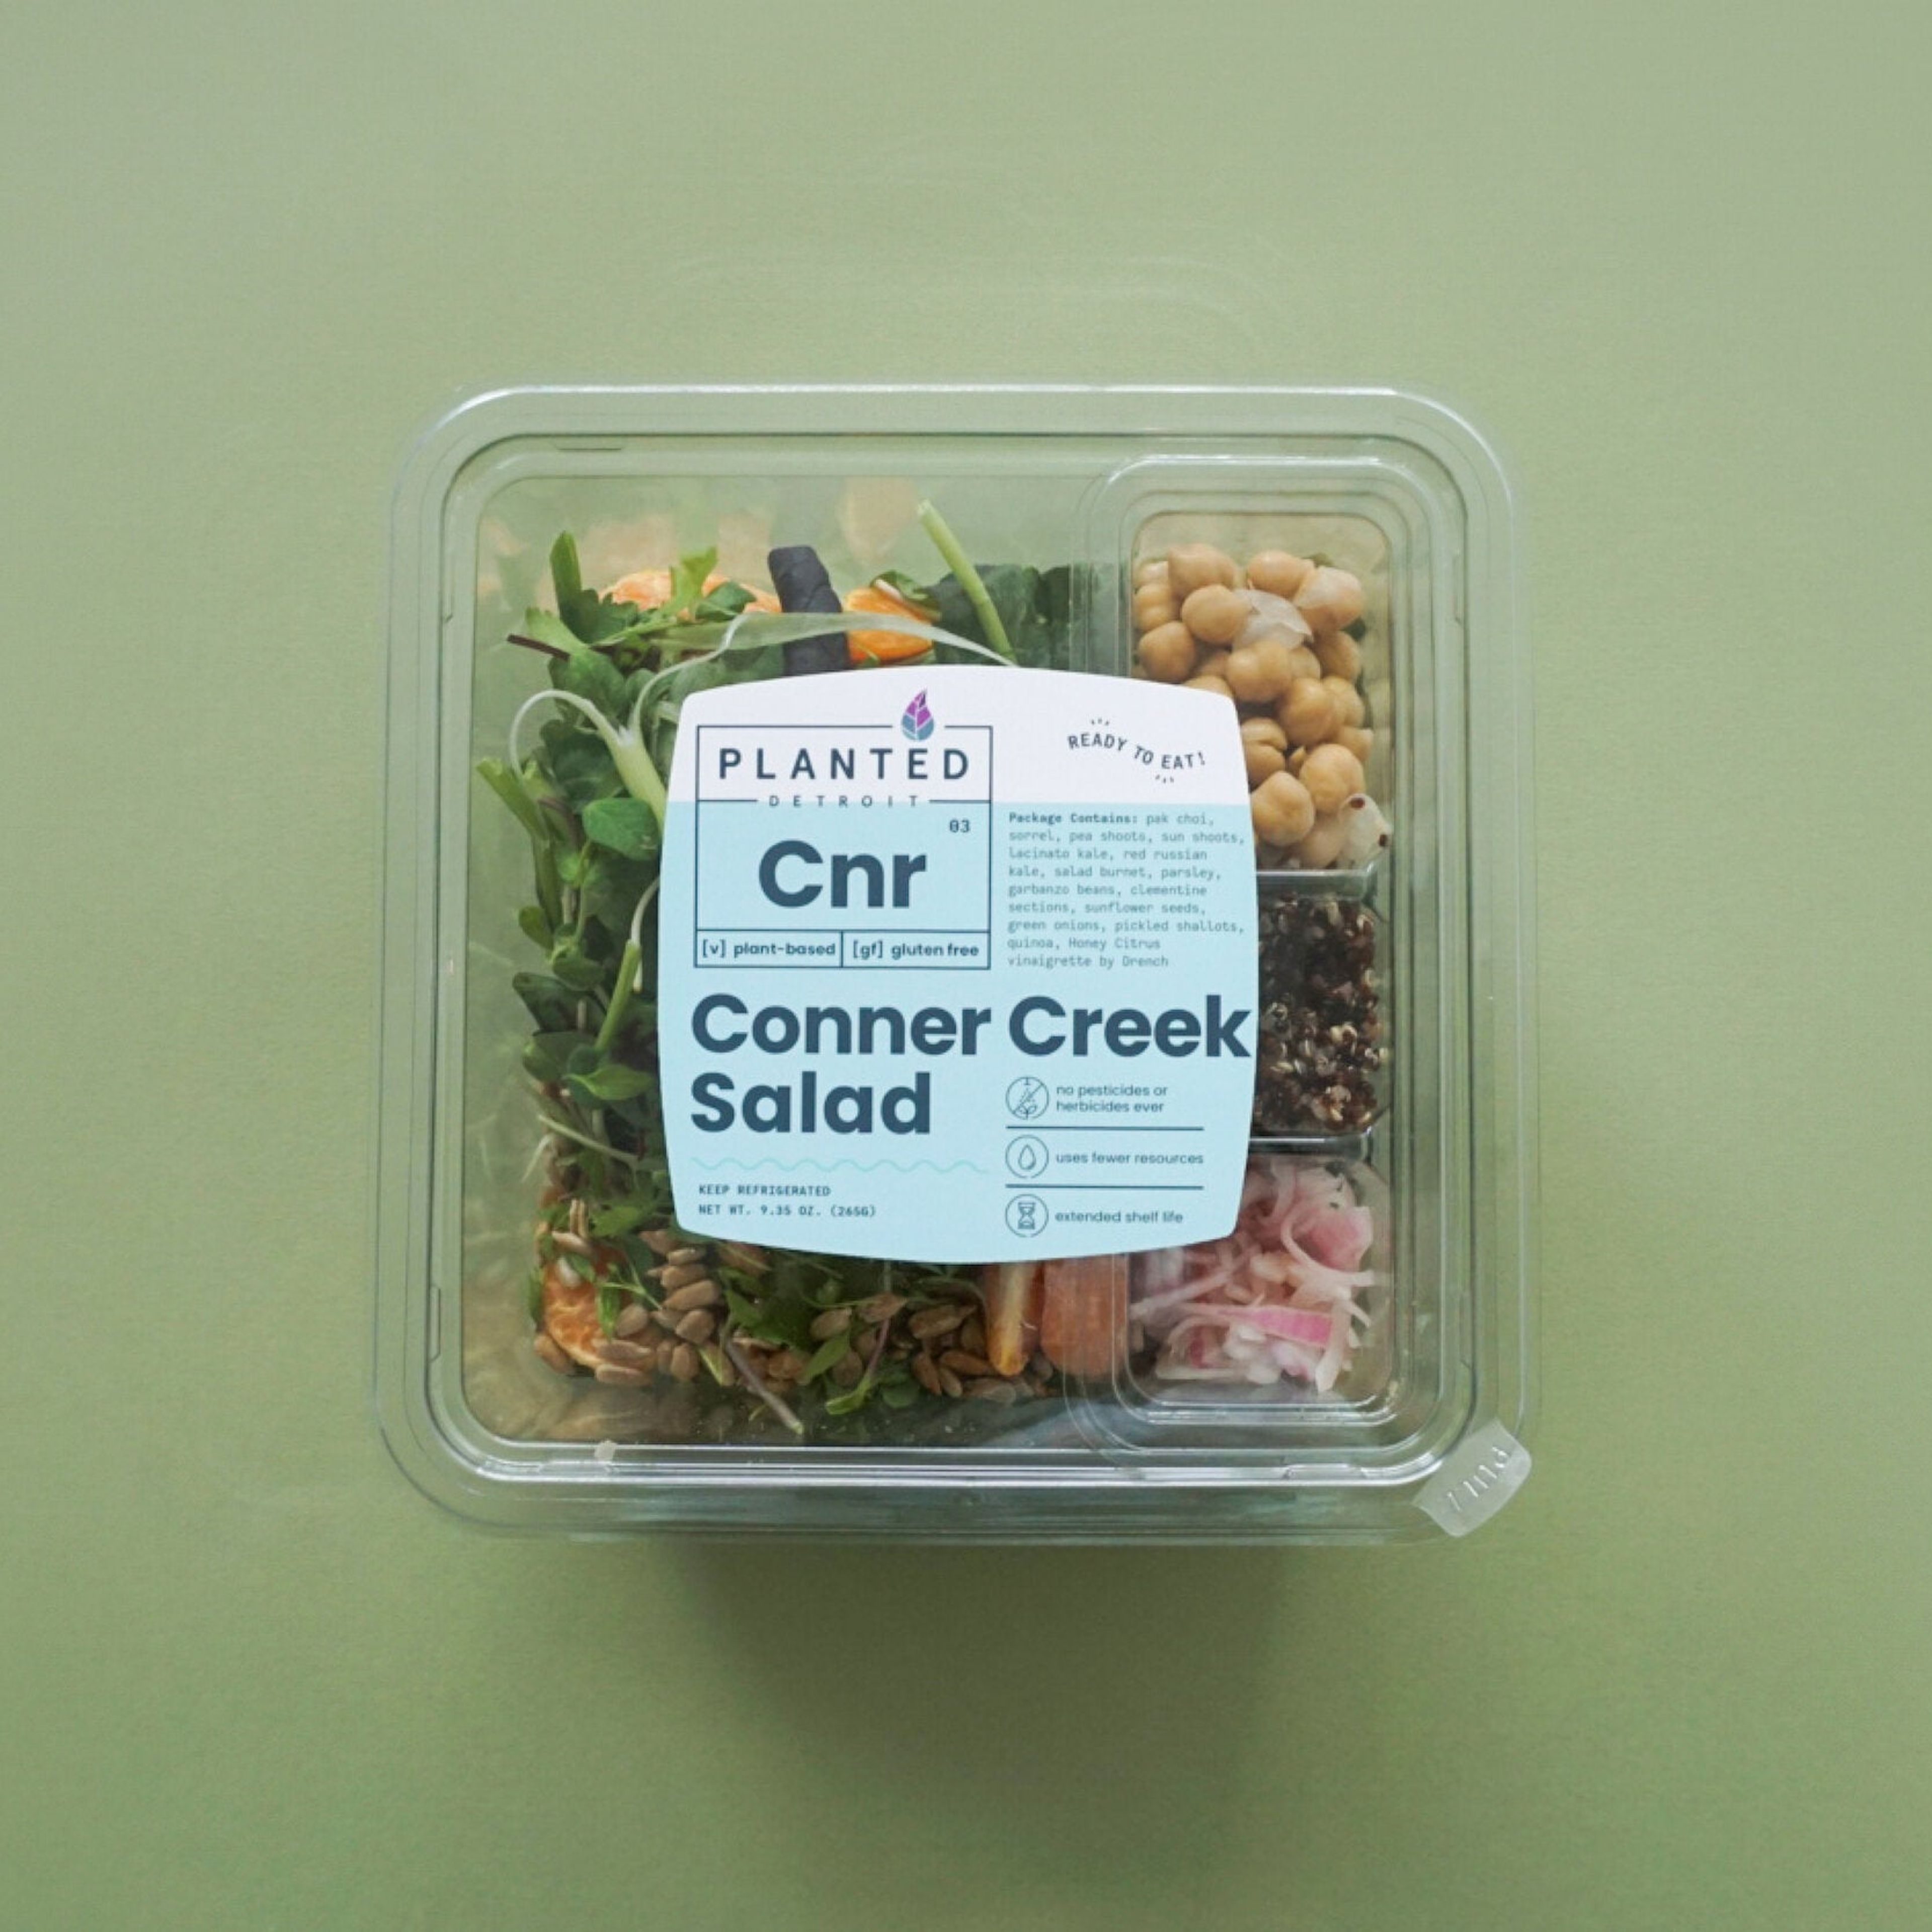 Conner Creek Salad